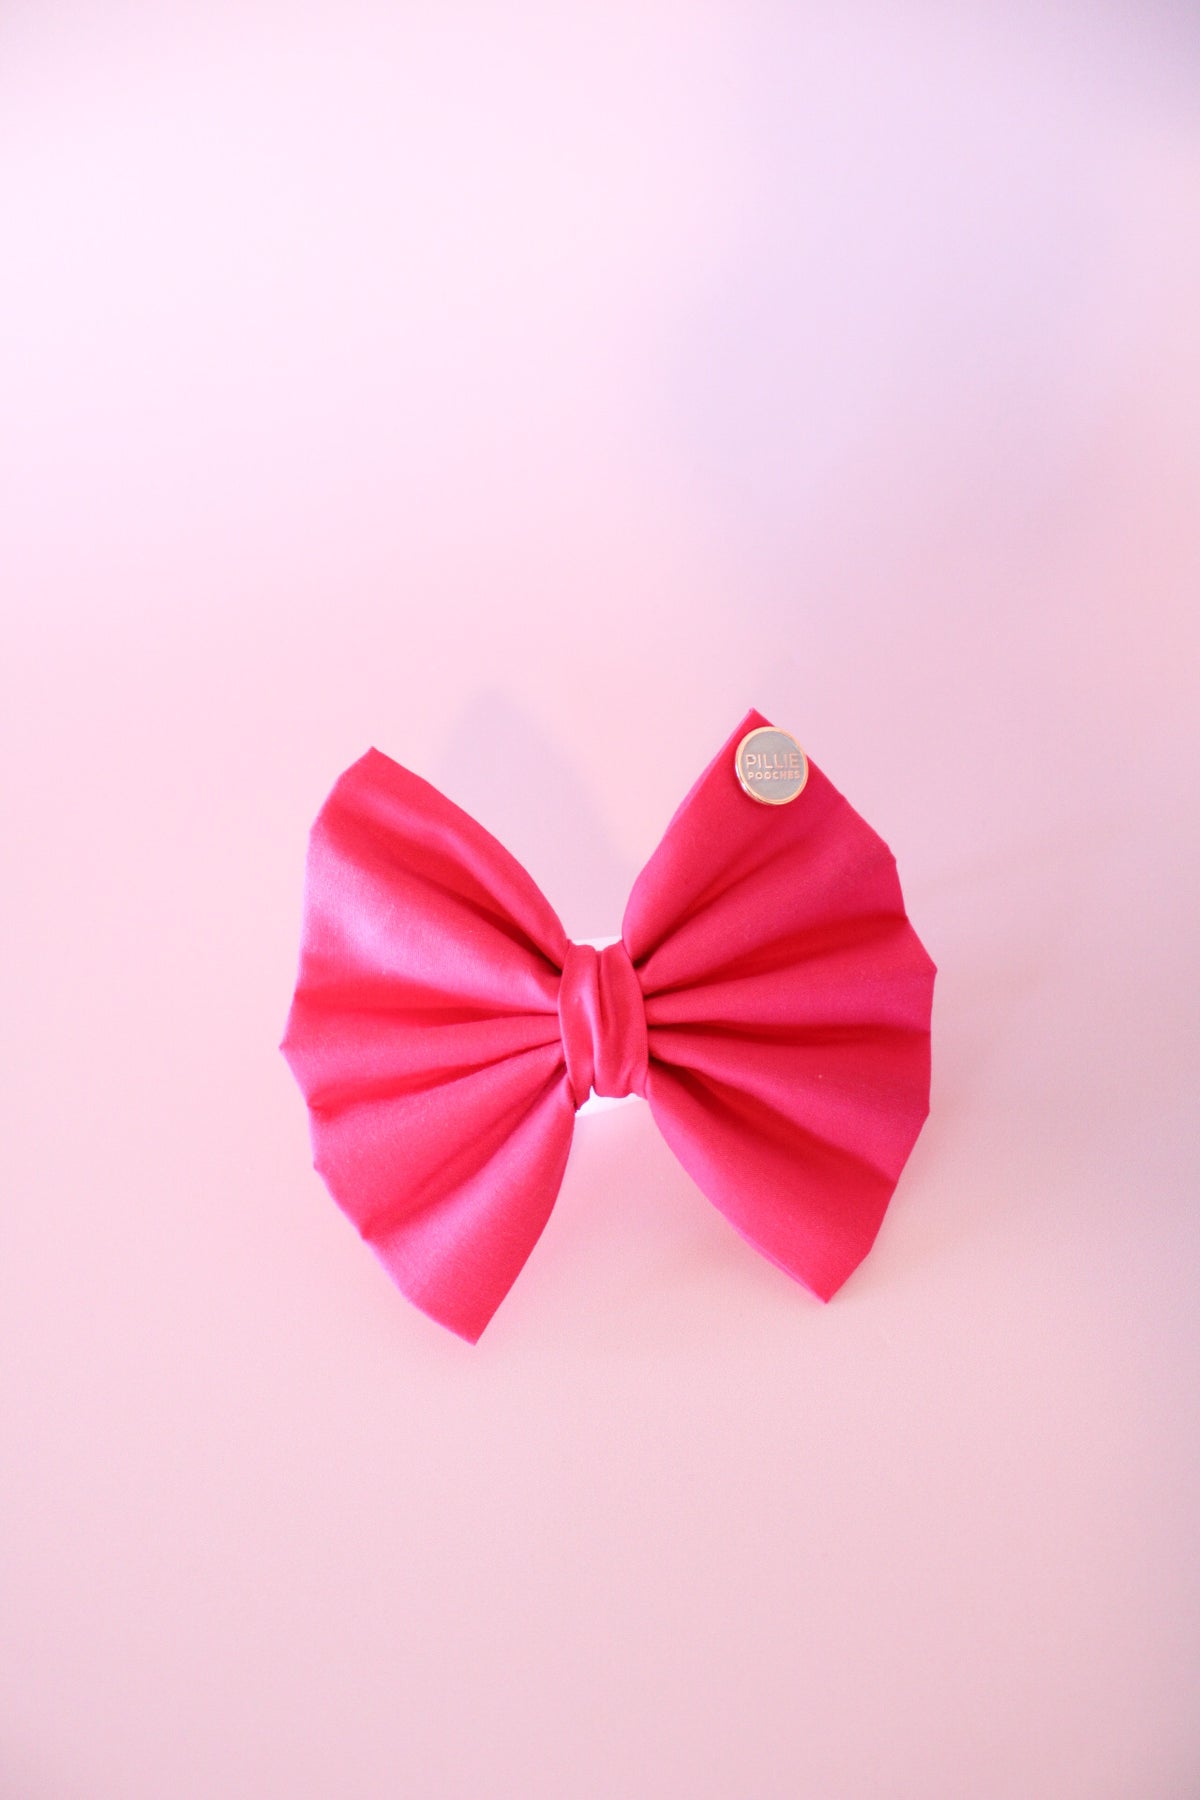 Margot IYKYK - Solid Pink Bows (Sailor or Standard)